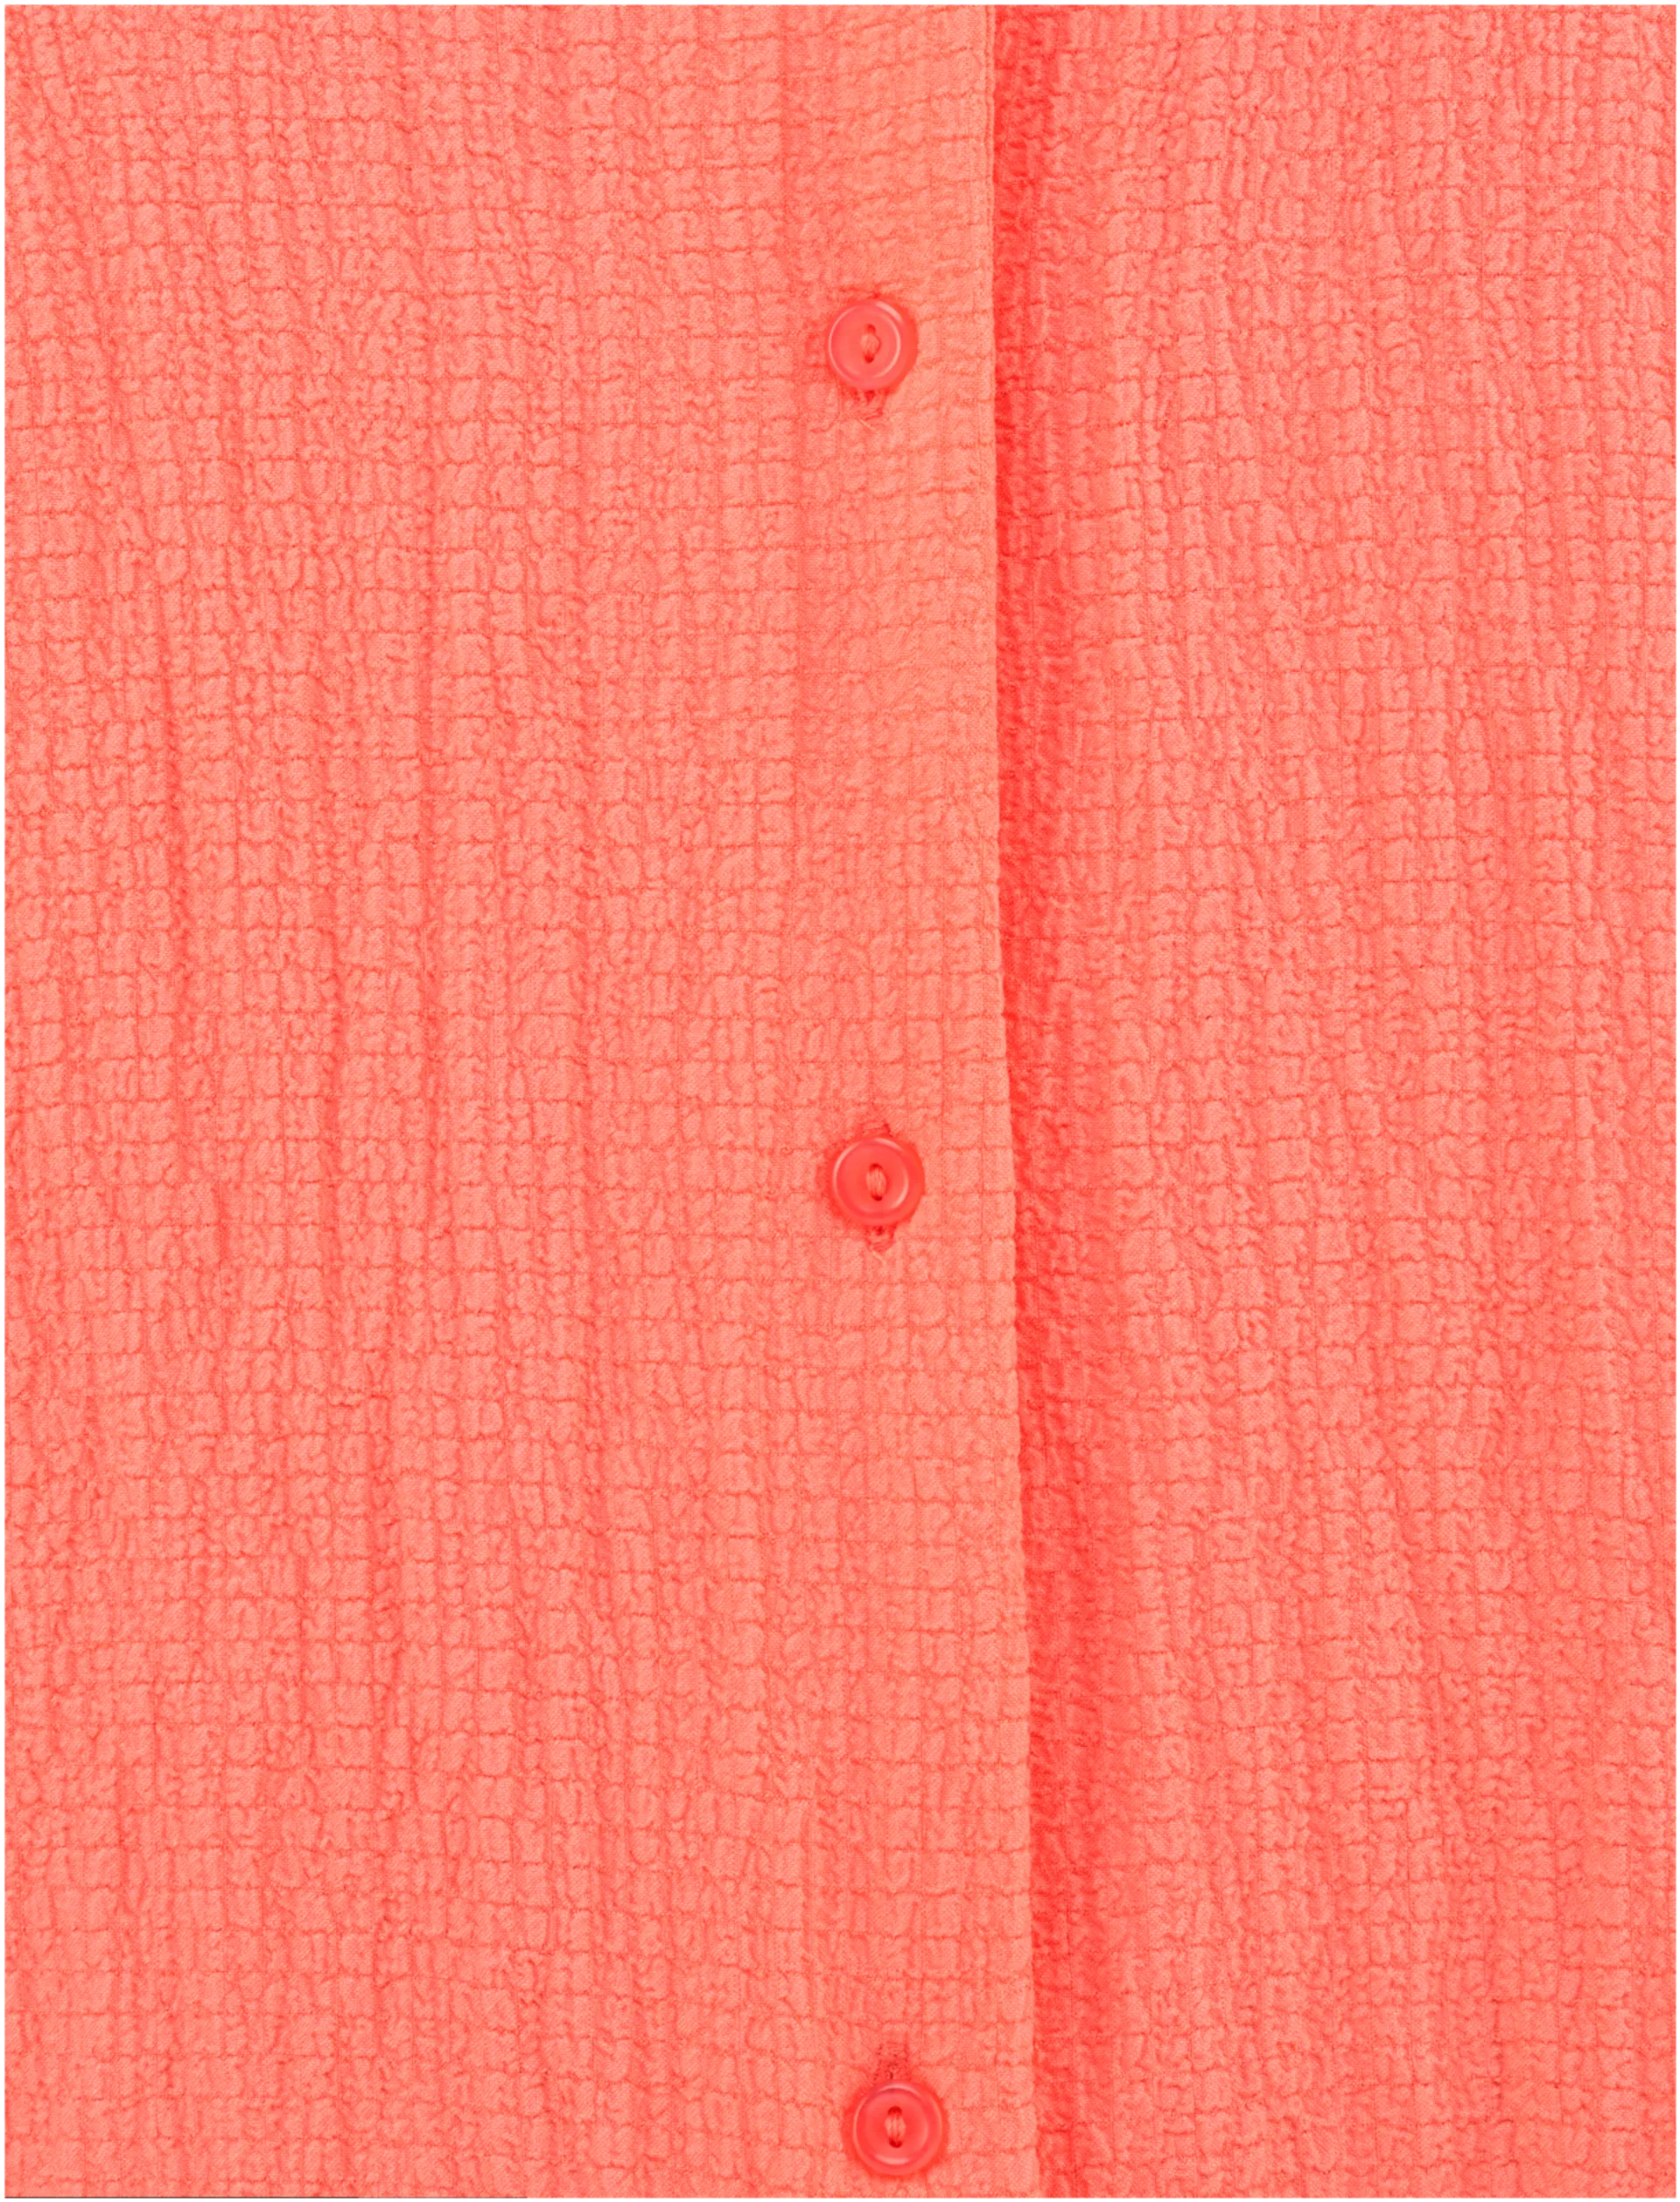 House naisten pusero 228HP27231, D-mitoitus - shell pink - 3